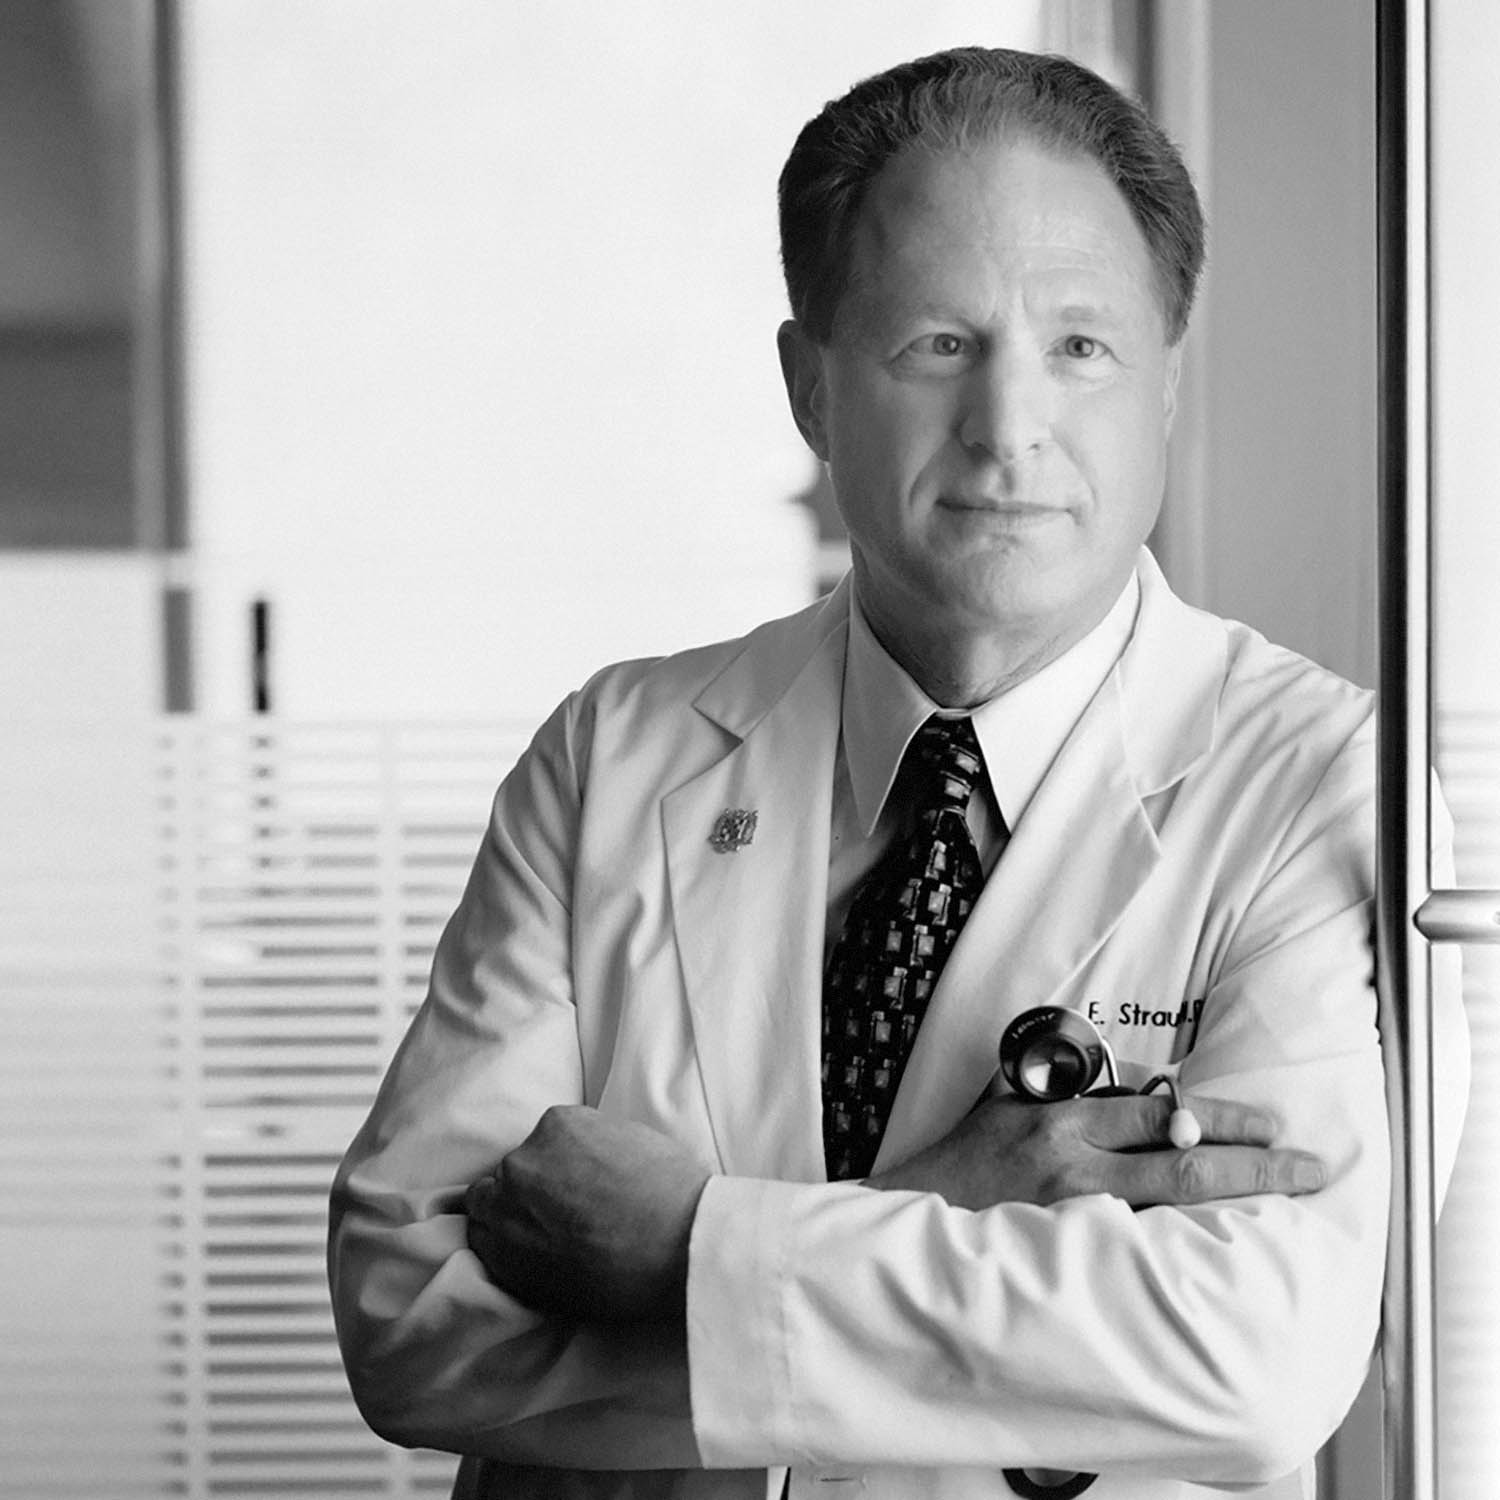 Dr. Stephen E. Straus